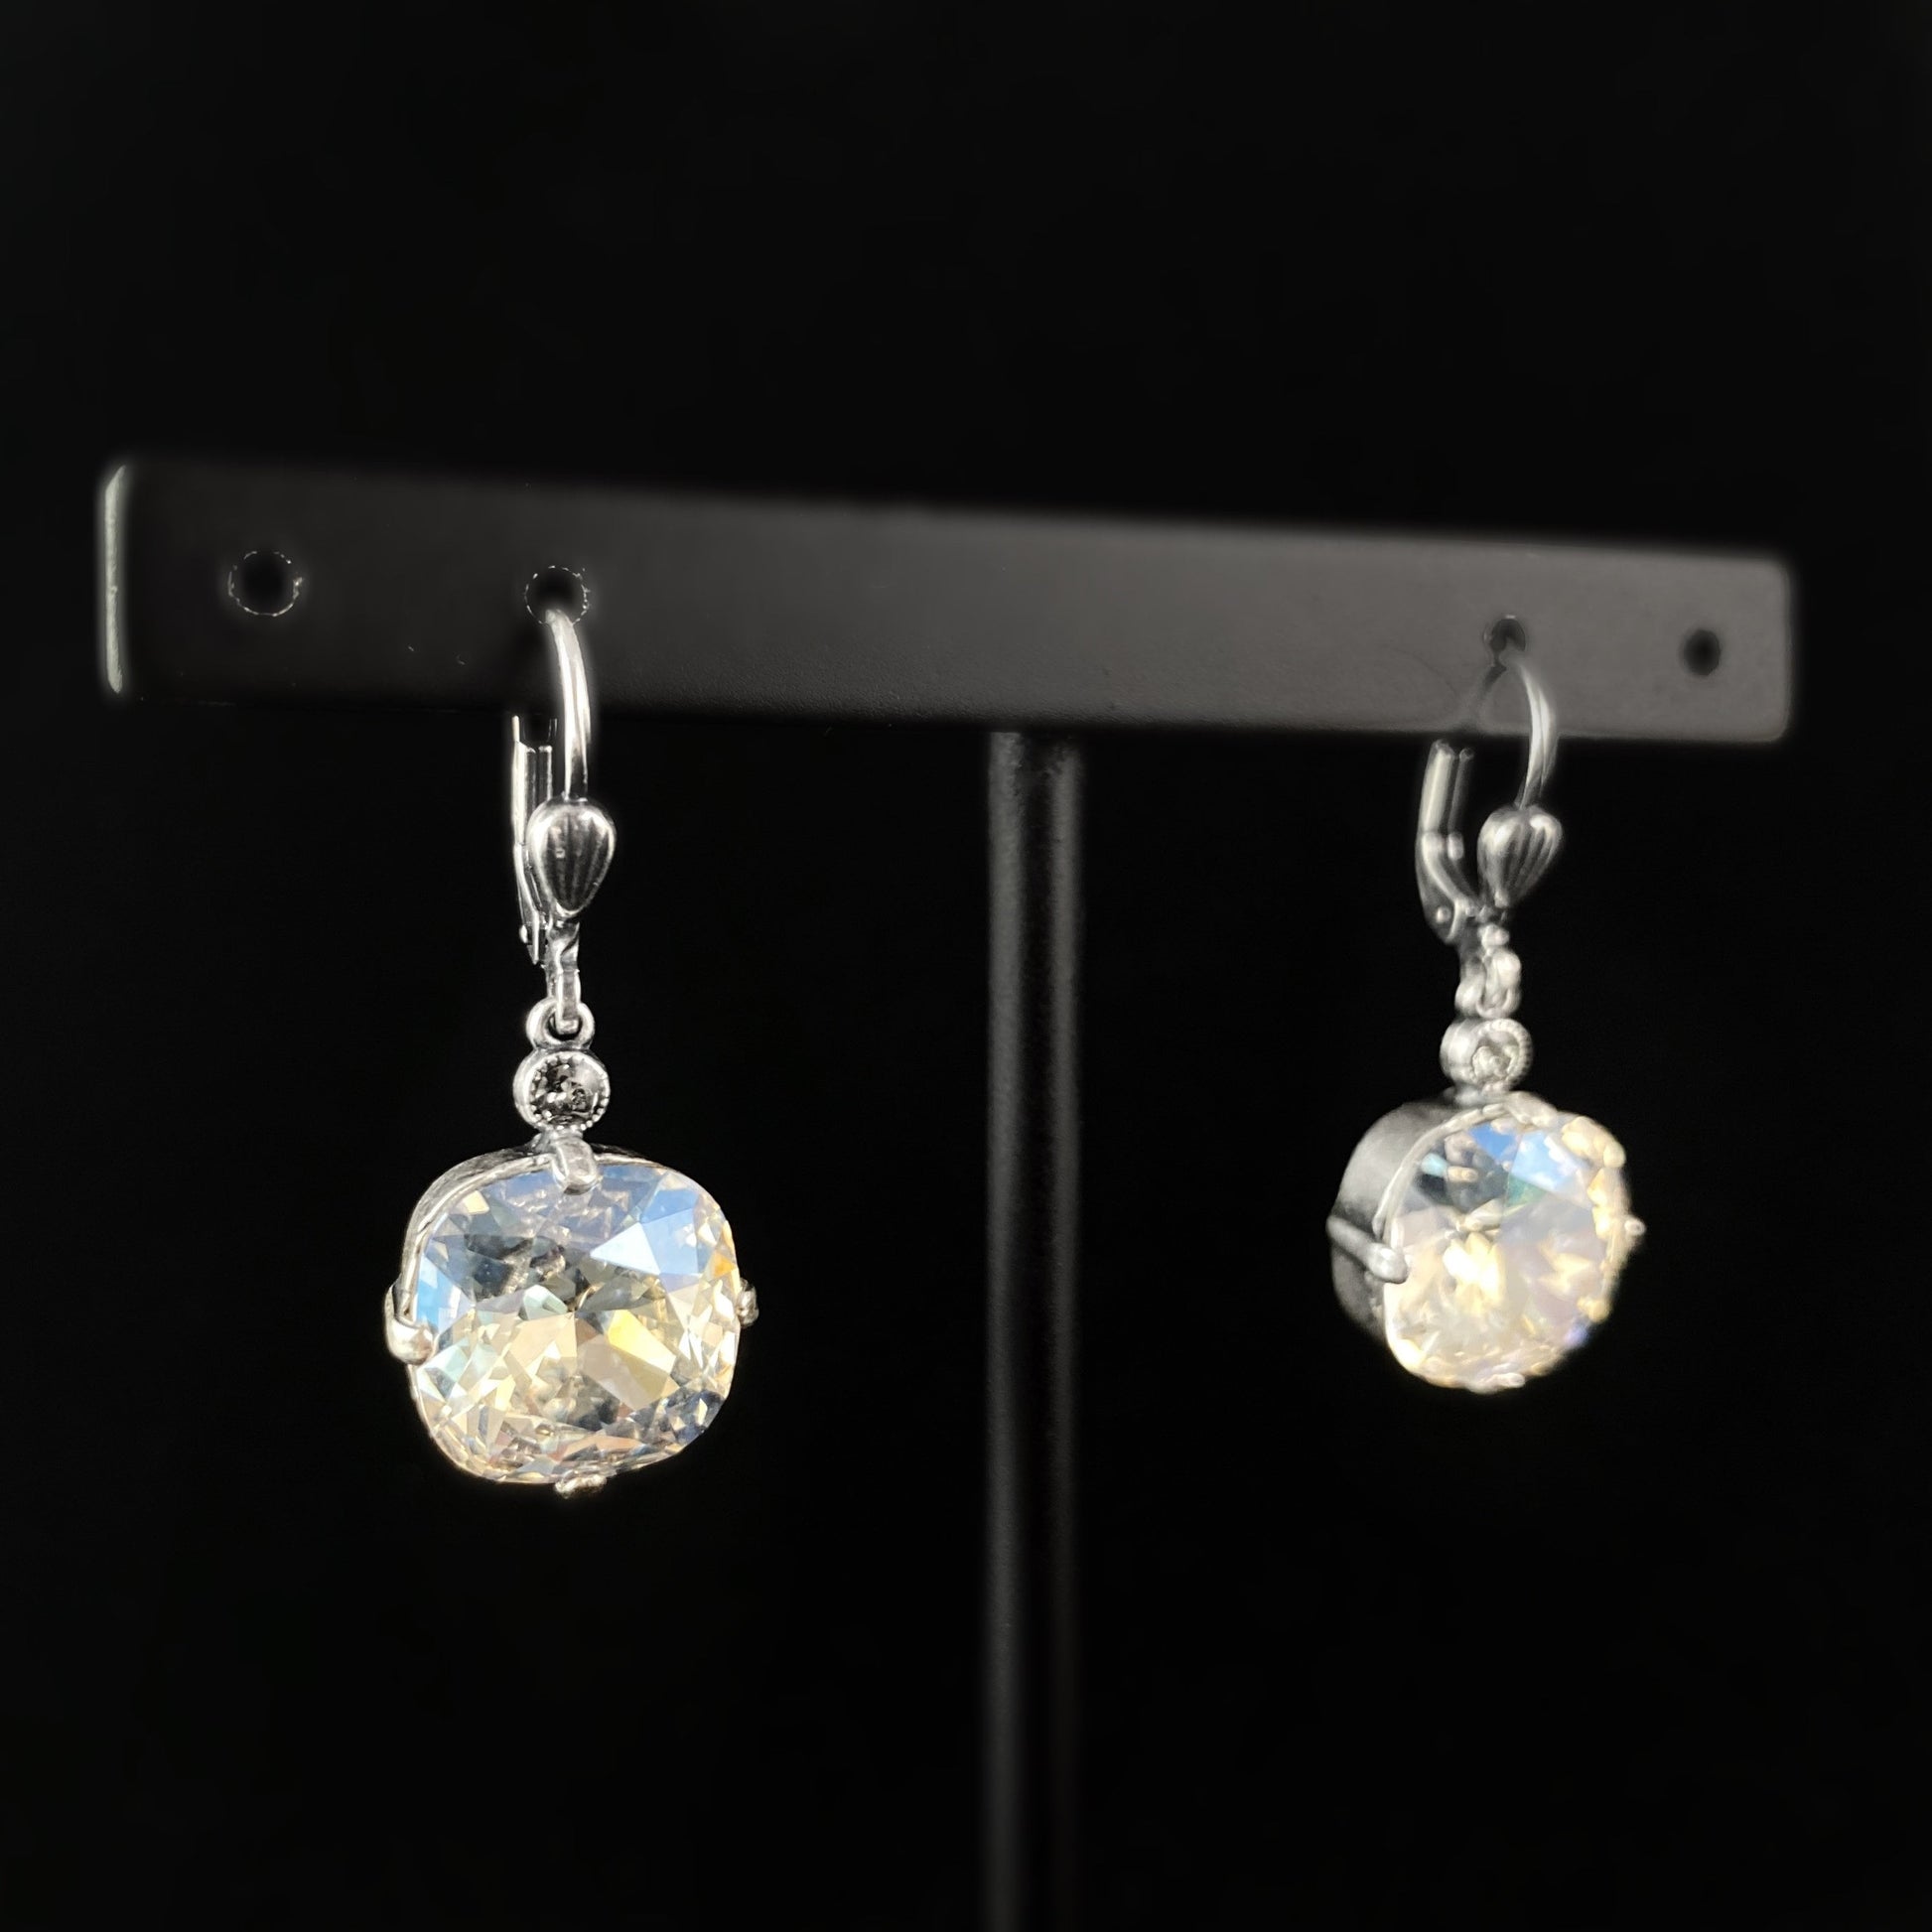 Clear Cushion Cut Swarovski Crystal Drop Earrings - La Vie Parisienne by Catherine Popesco